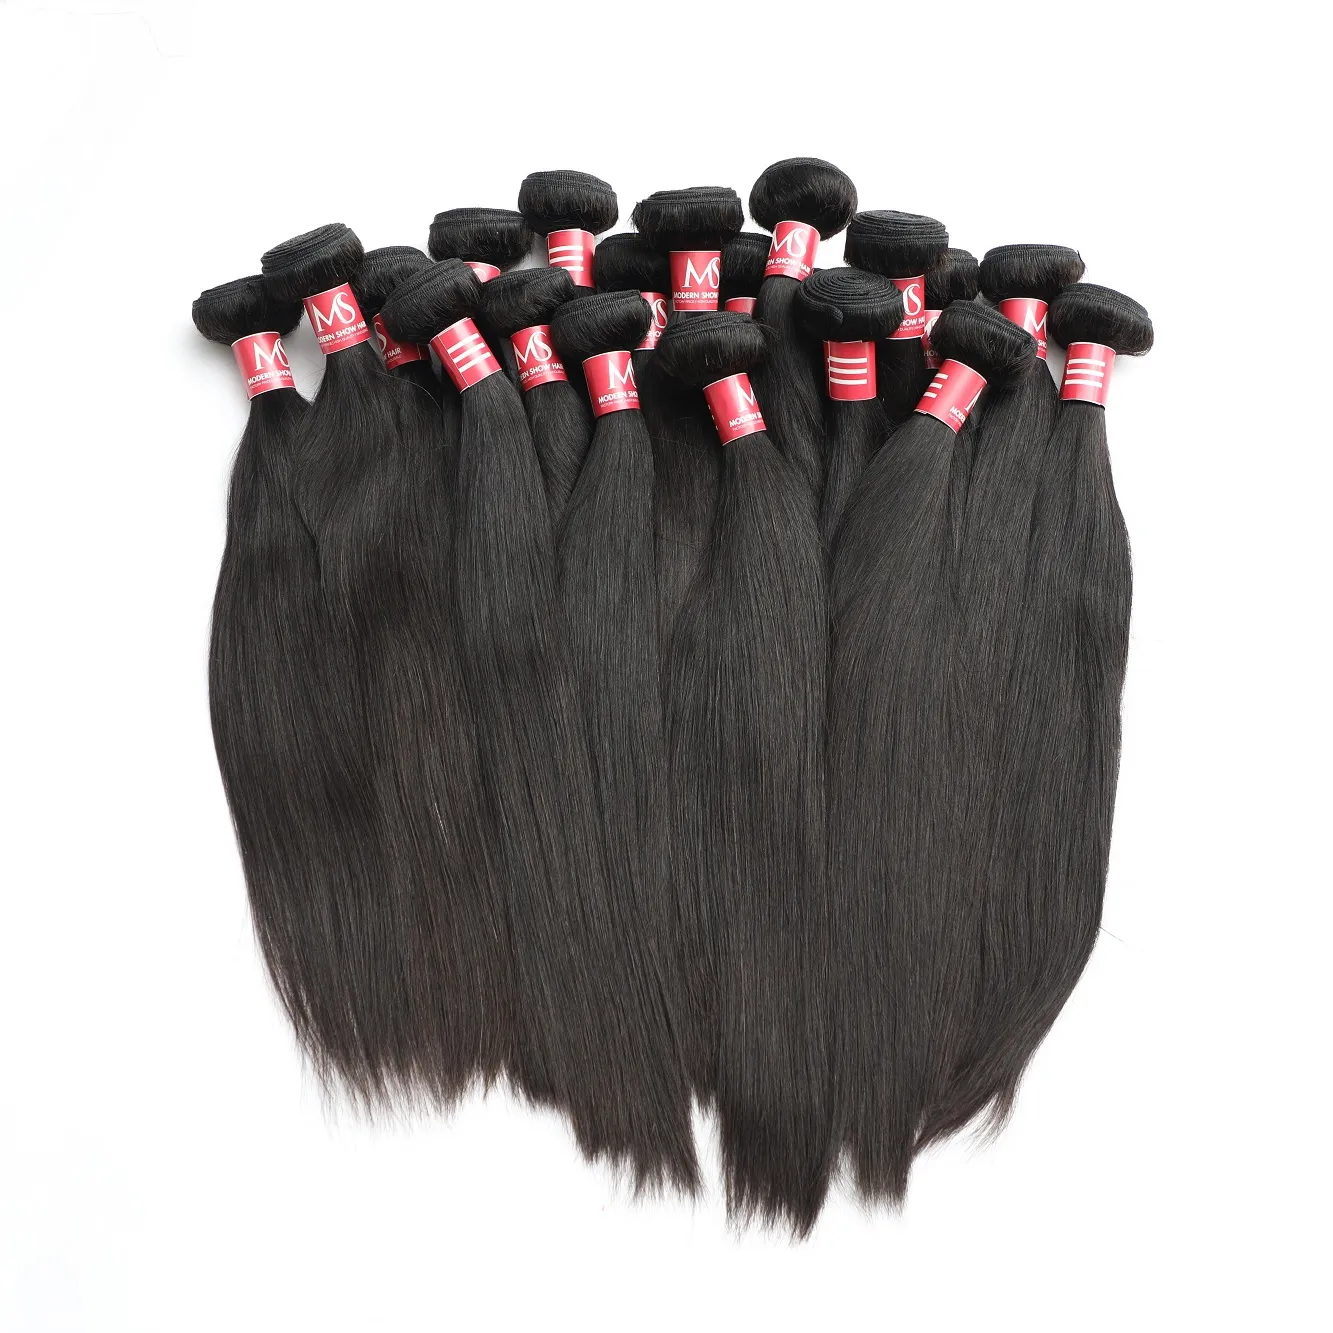 Wholesale Human Hair Bundles,100% Brazilian Hair Natural Color Raw Unprocessed Remy Human Hair Extension For Black Women